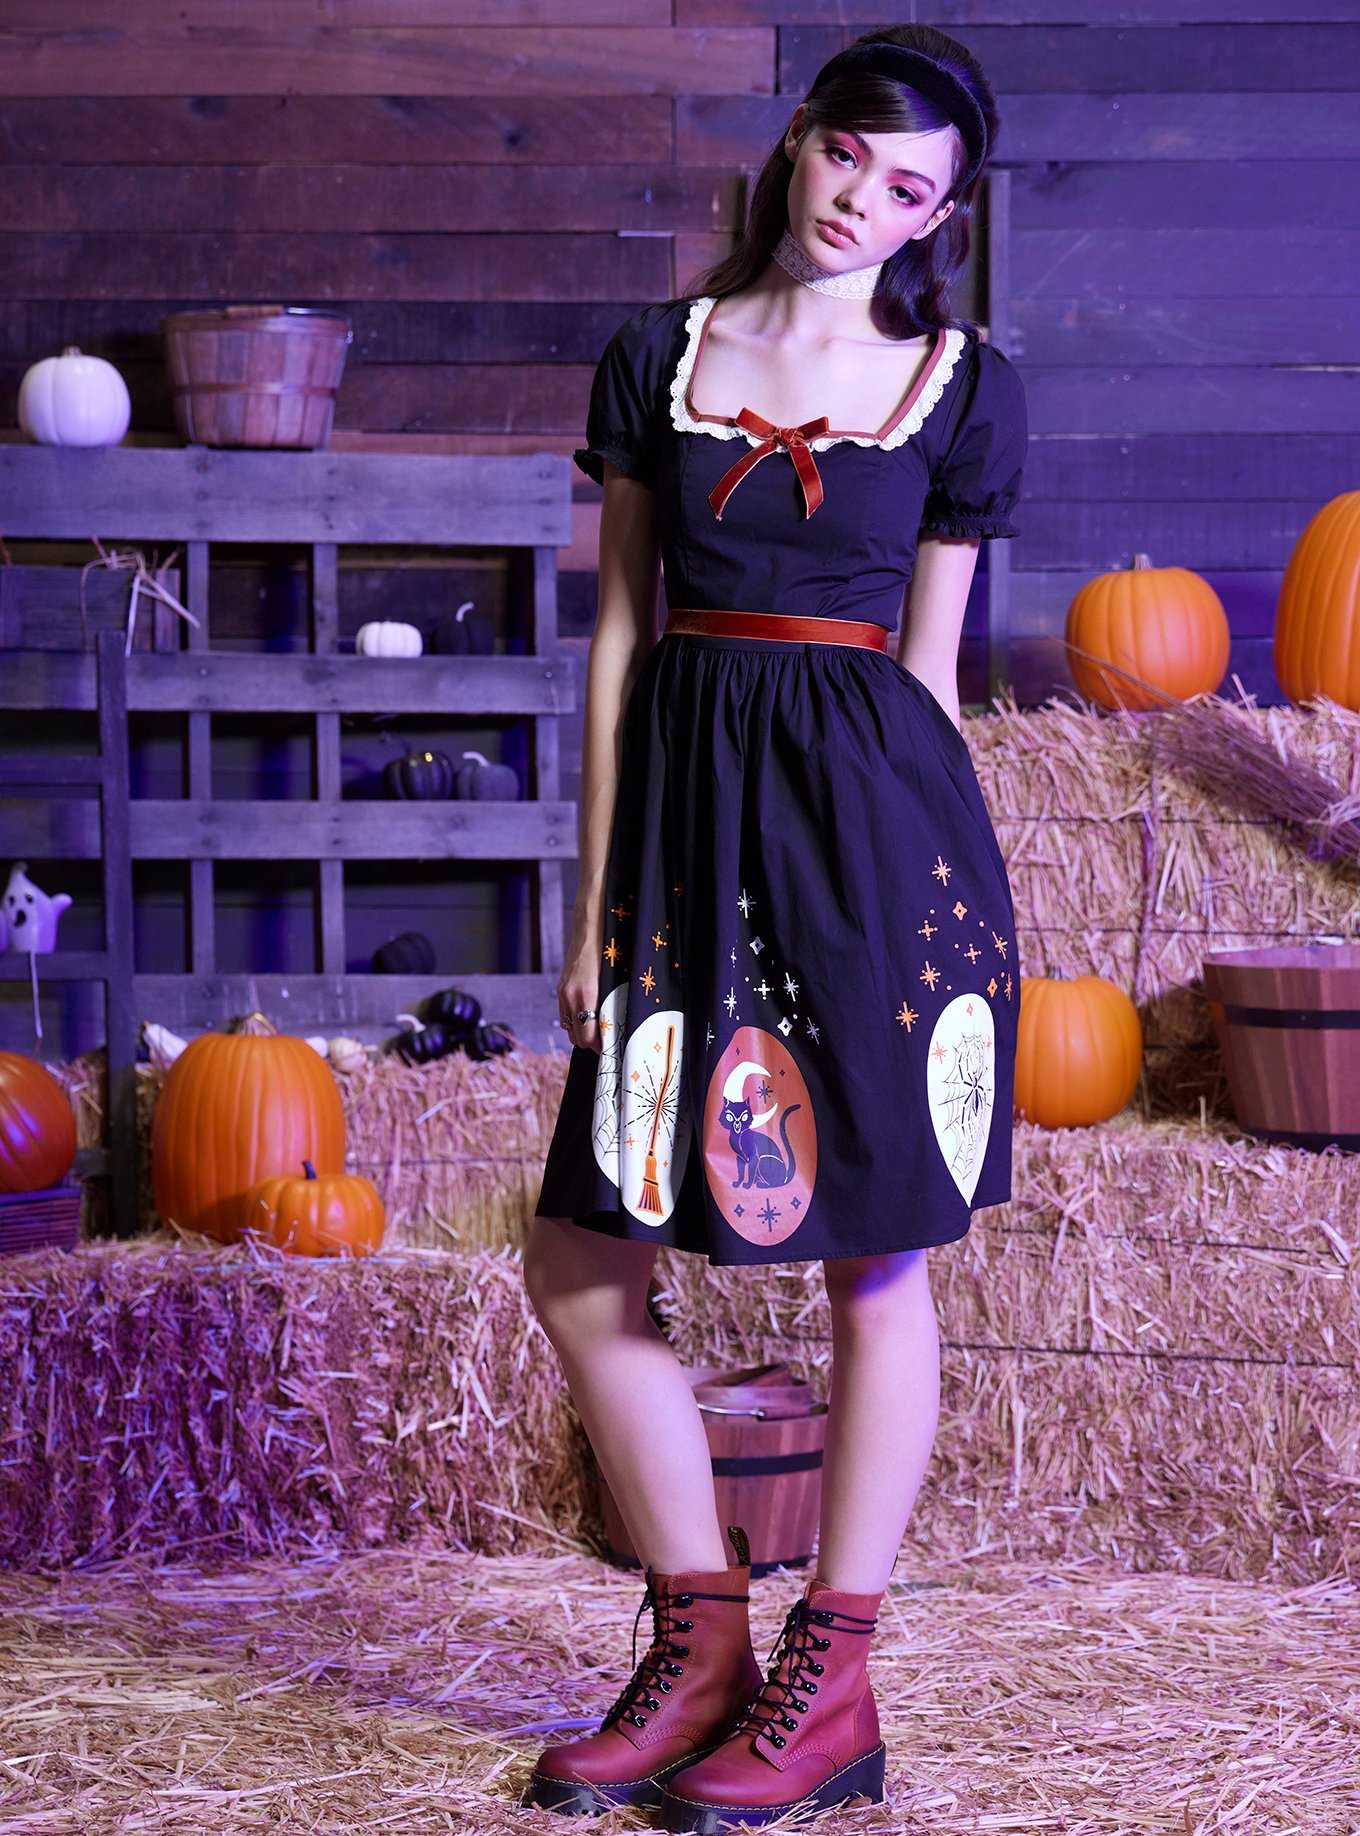 American Horror Story Hot Topic Halloween Striped corset Dress Black White  S